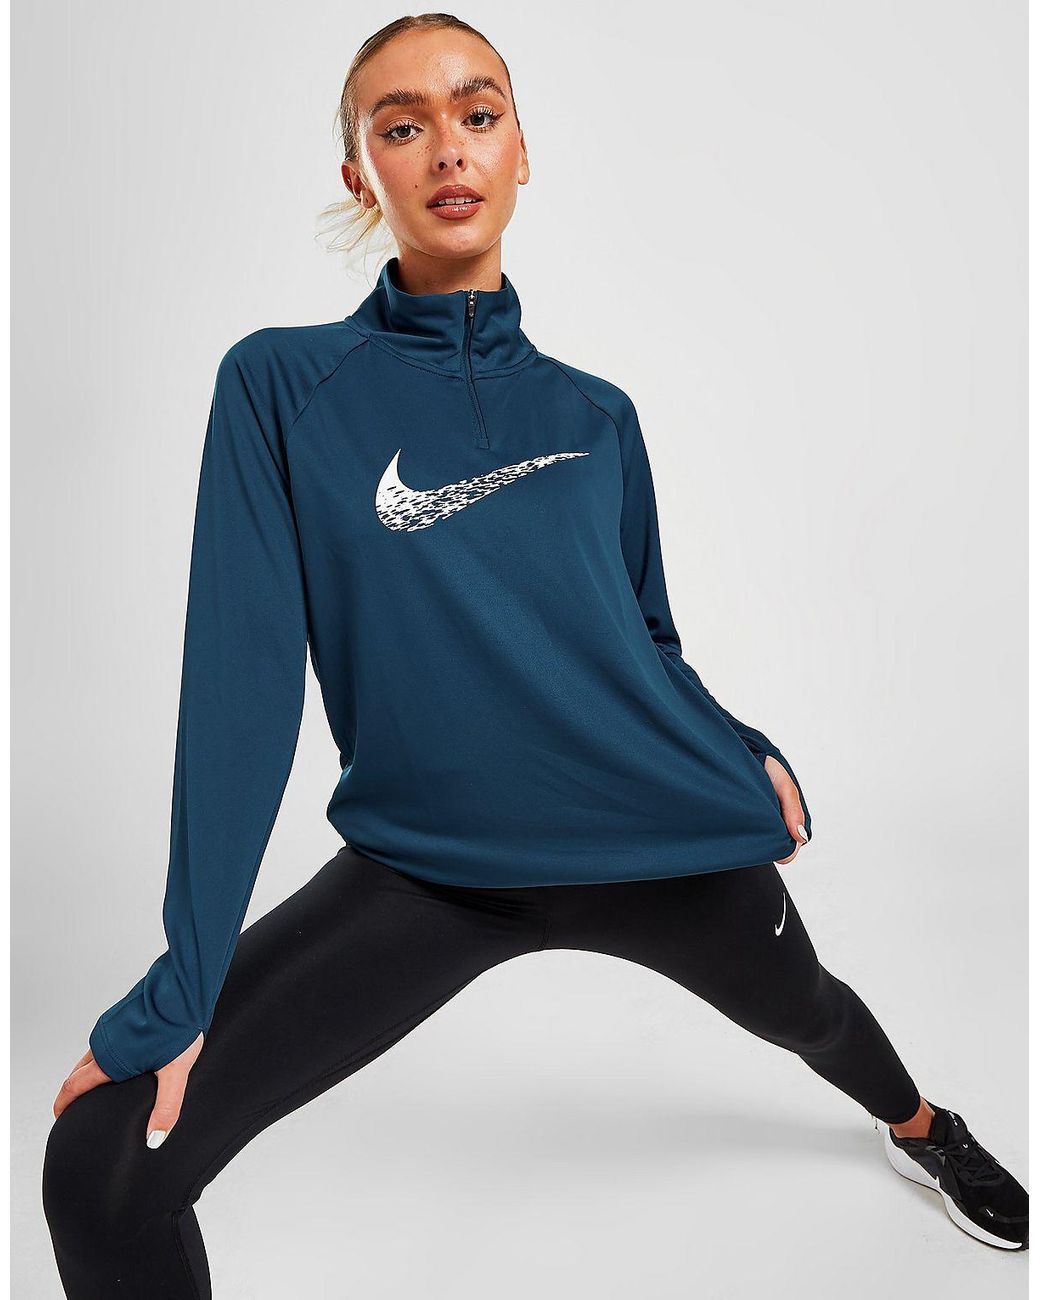 Nike Running Swoosh 1/4 Zip Dri-fit Top in Blue